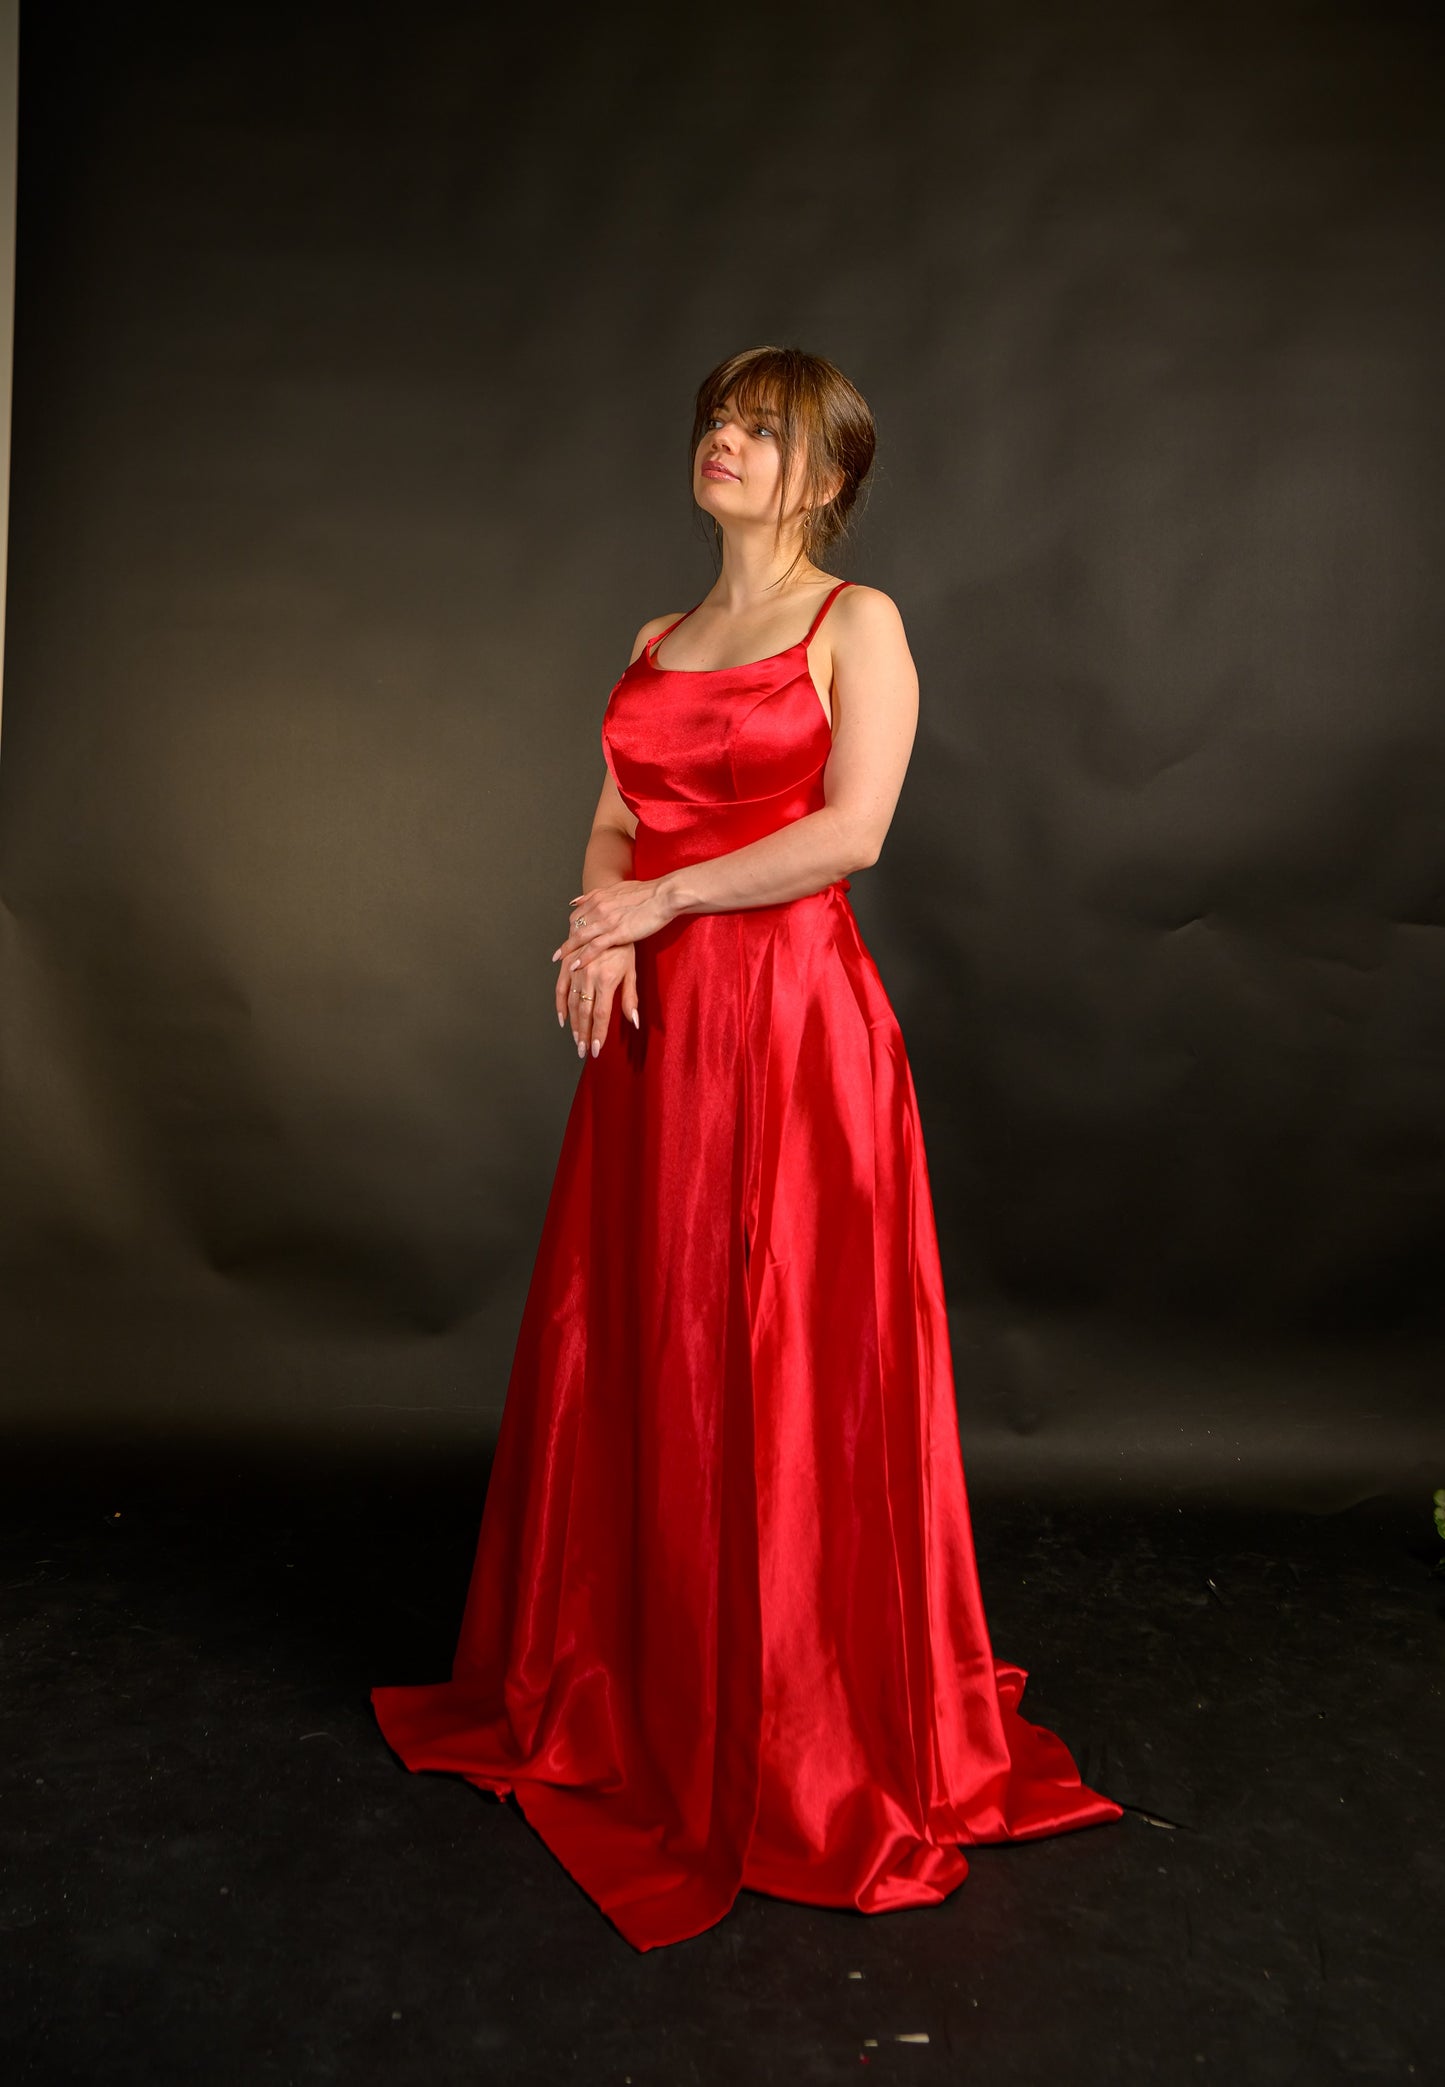 Red Evening Prom Dress